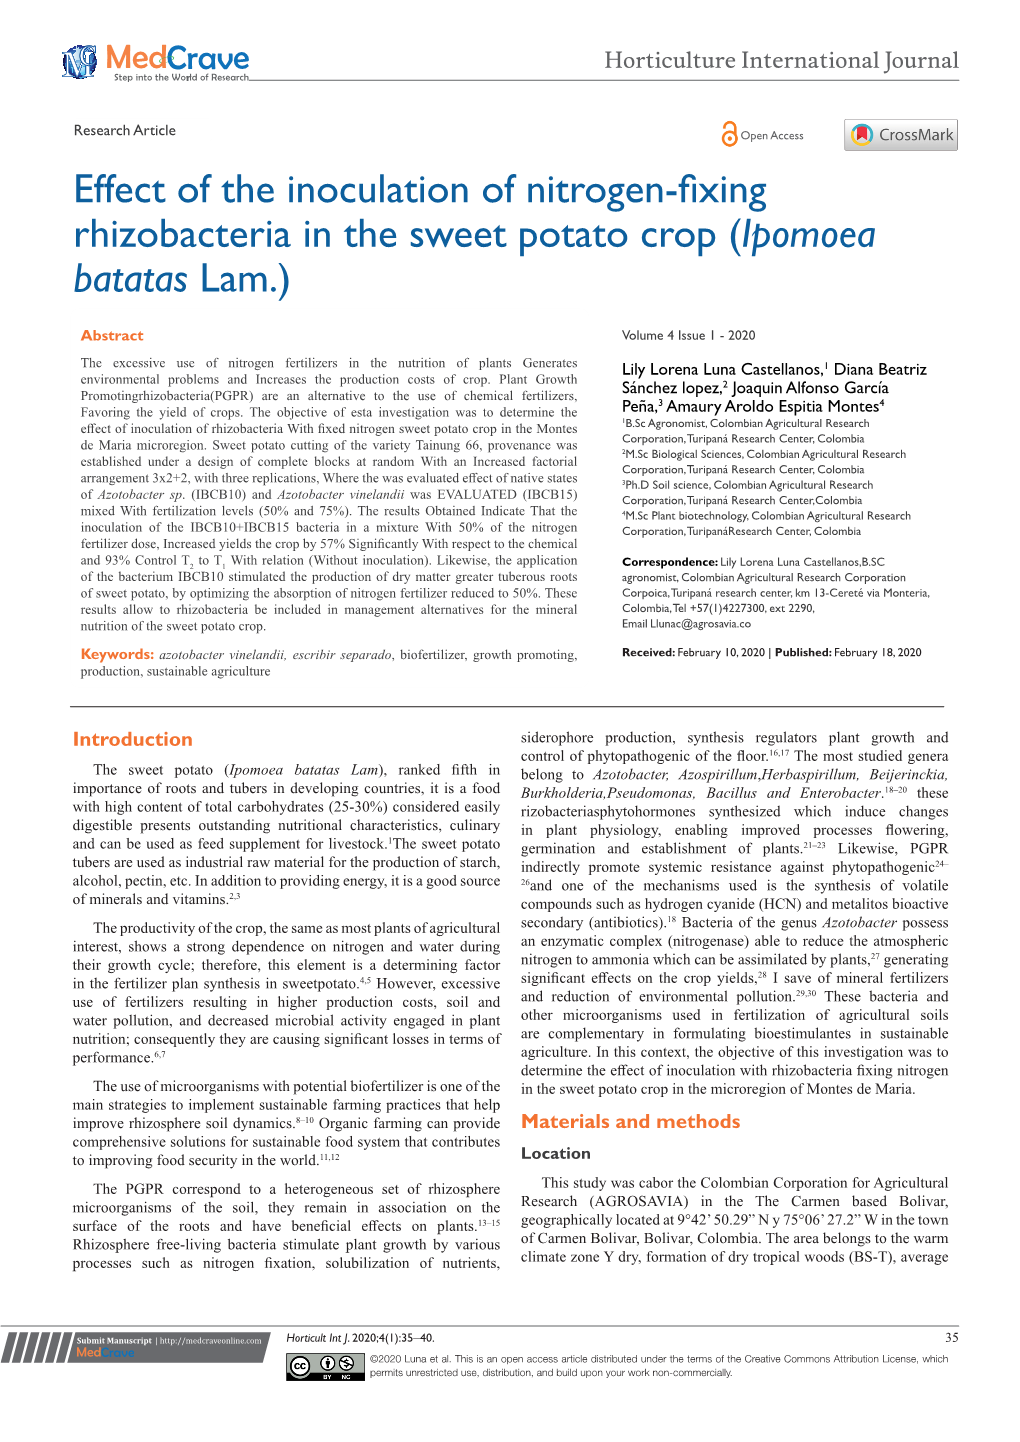 Effect of the Inoculation of Nitrogen-Fixing Rhizobacteria in the Sweet Potato Crop (Ipomoea Batatas Lam.)